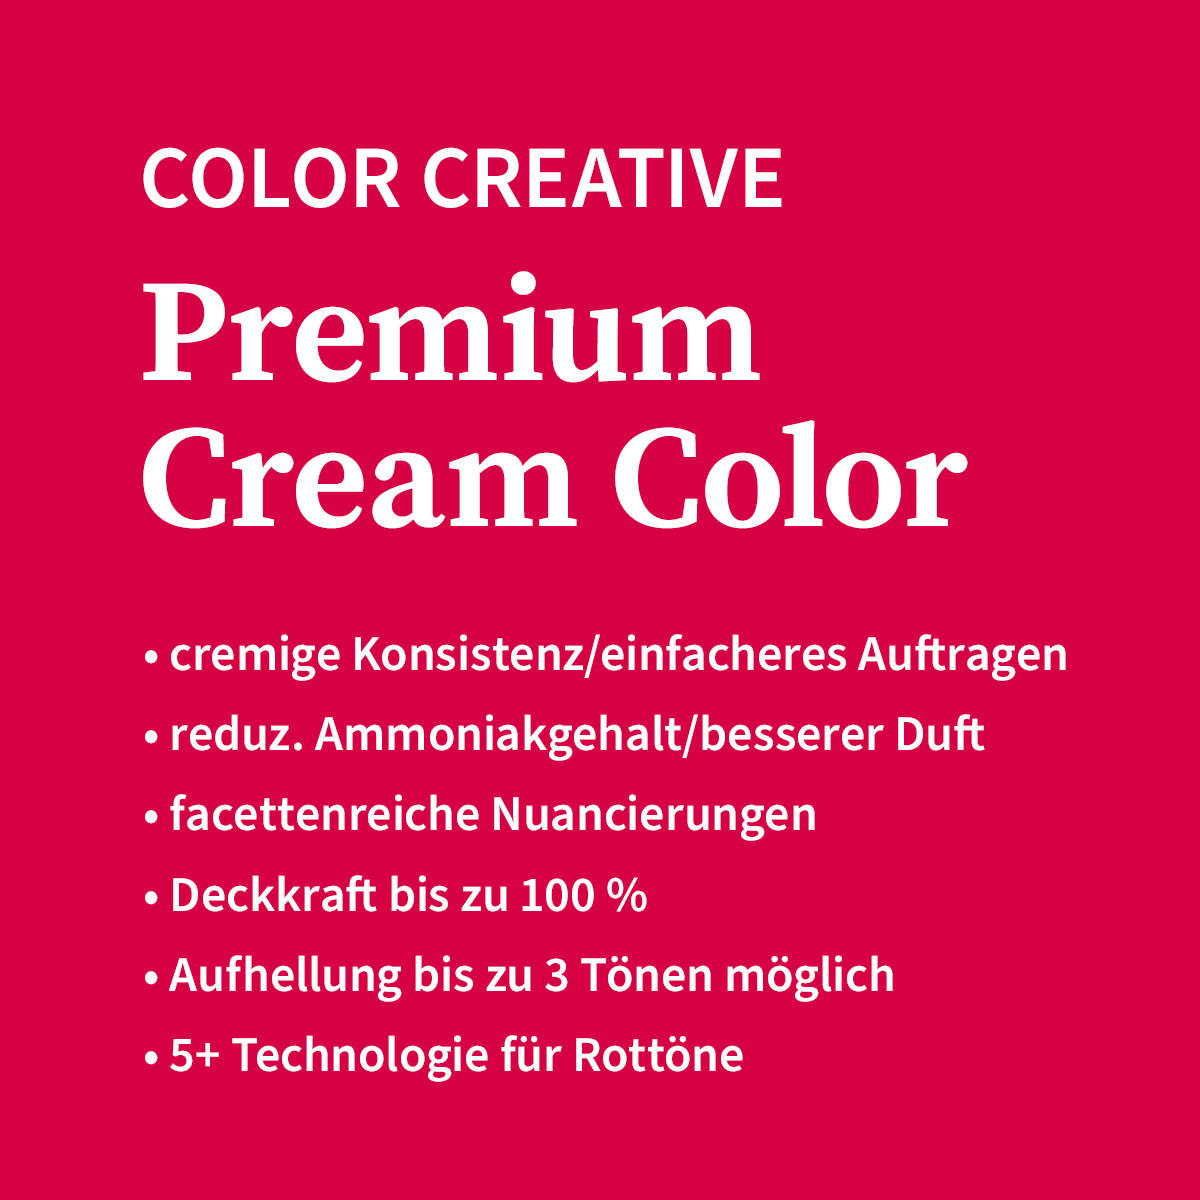 Basler Color Creative Premium Cream Color 5/66 hellbraun violett intensiv, Tube 60 ml - 4